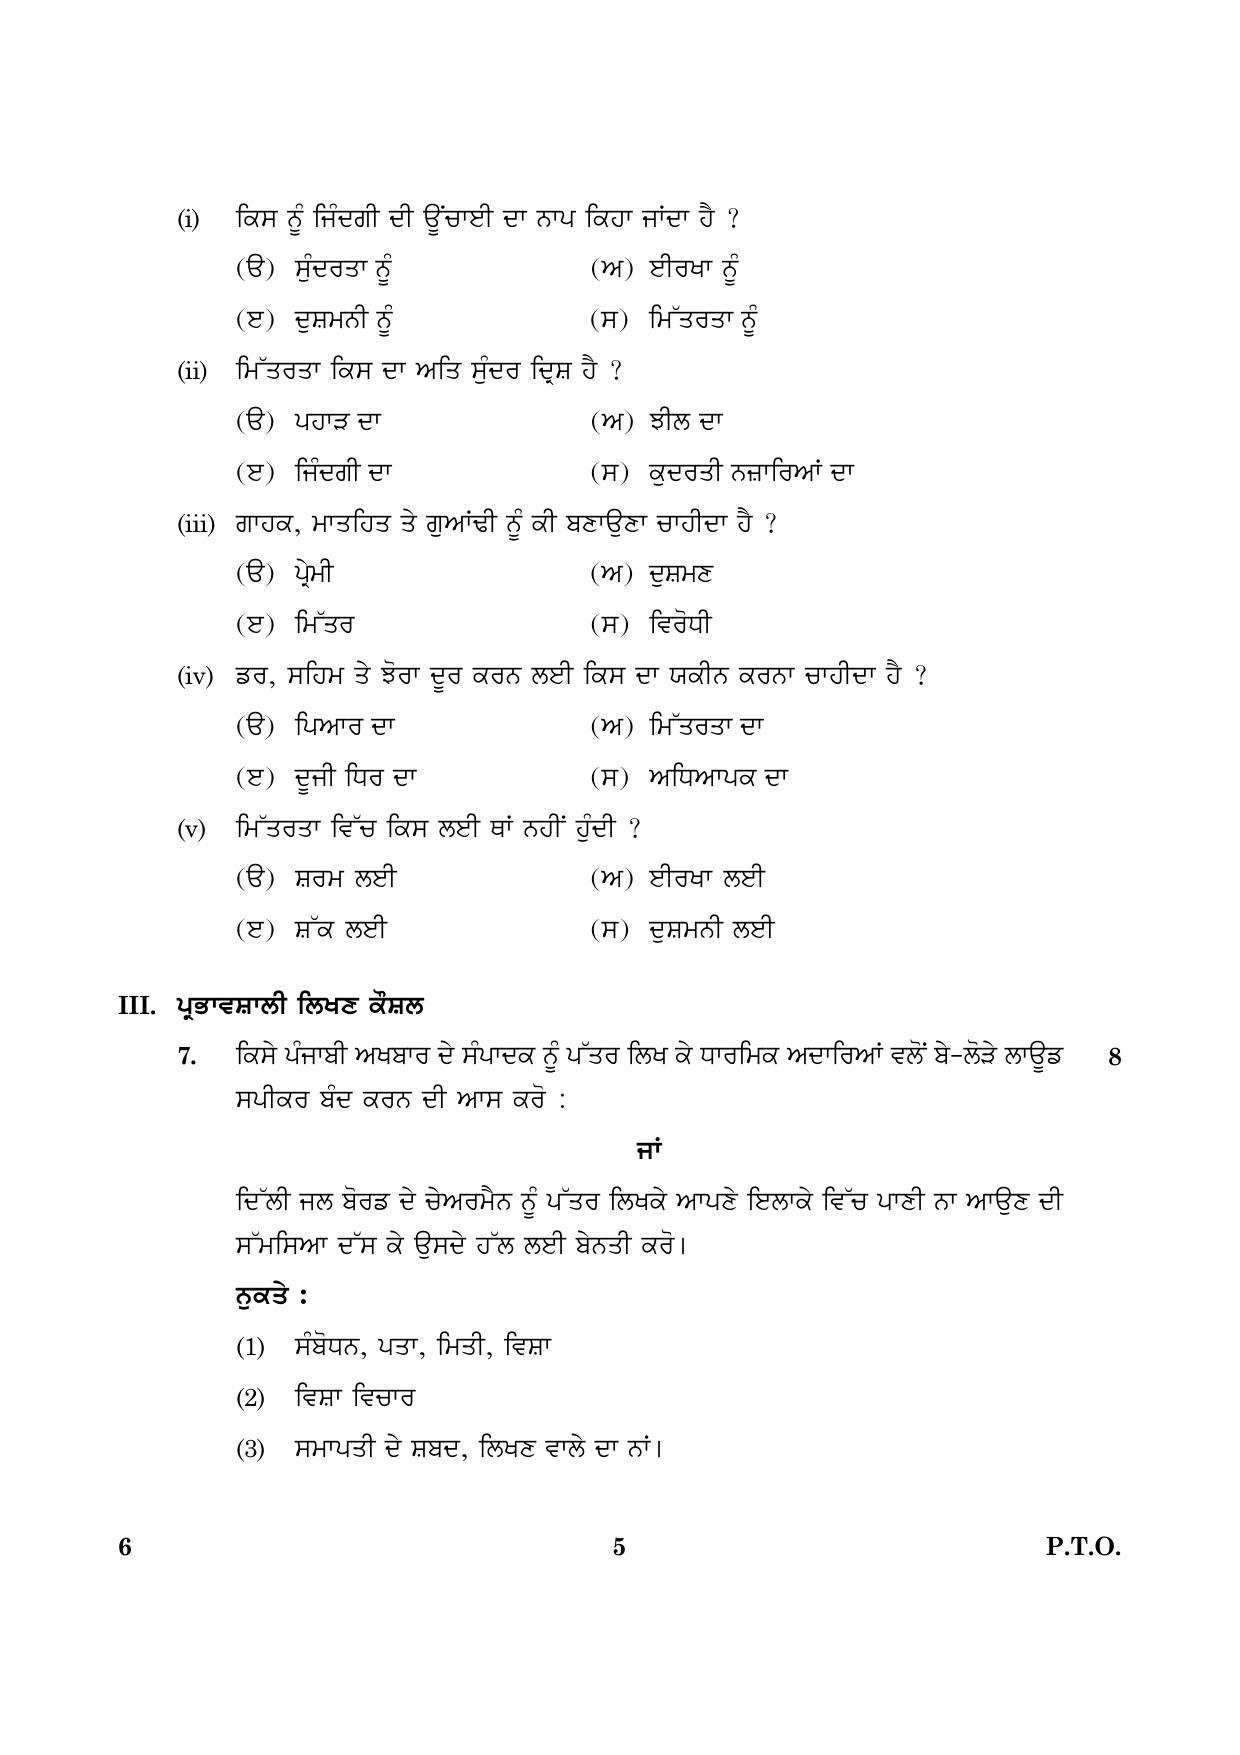 CBSE Class 10 006 Punjabi 2016 Question Paper - Page 5